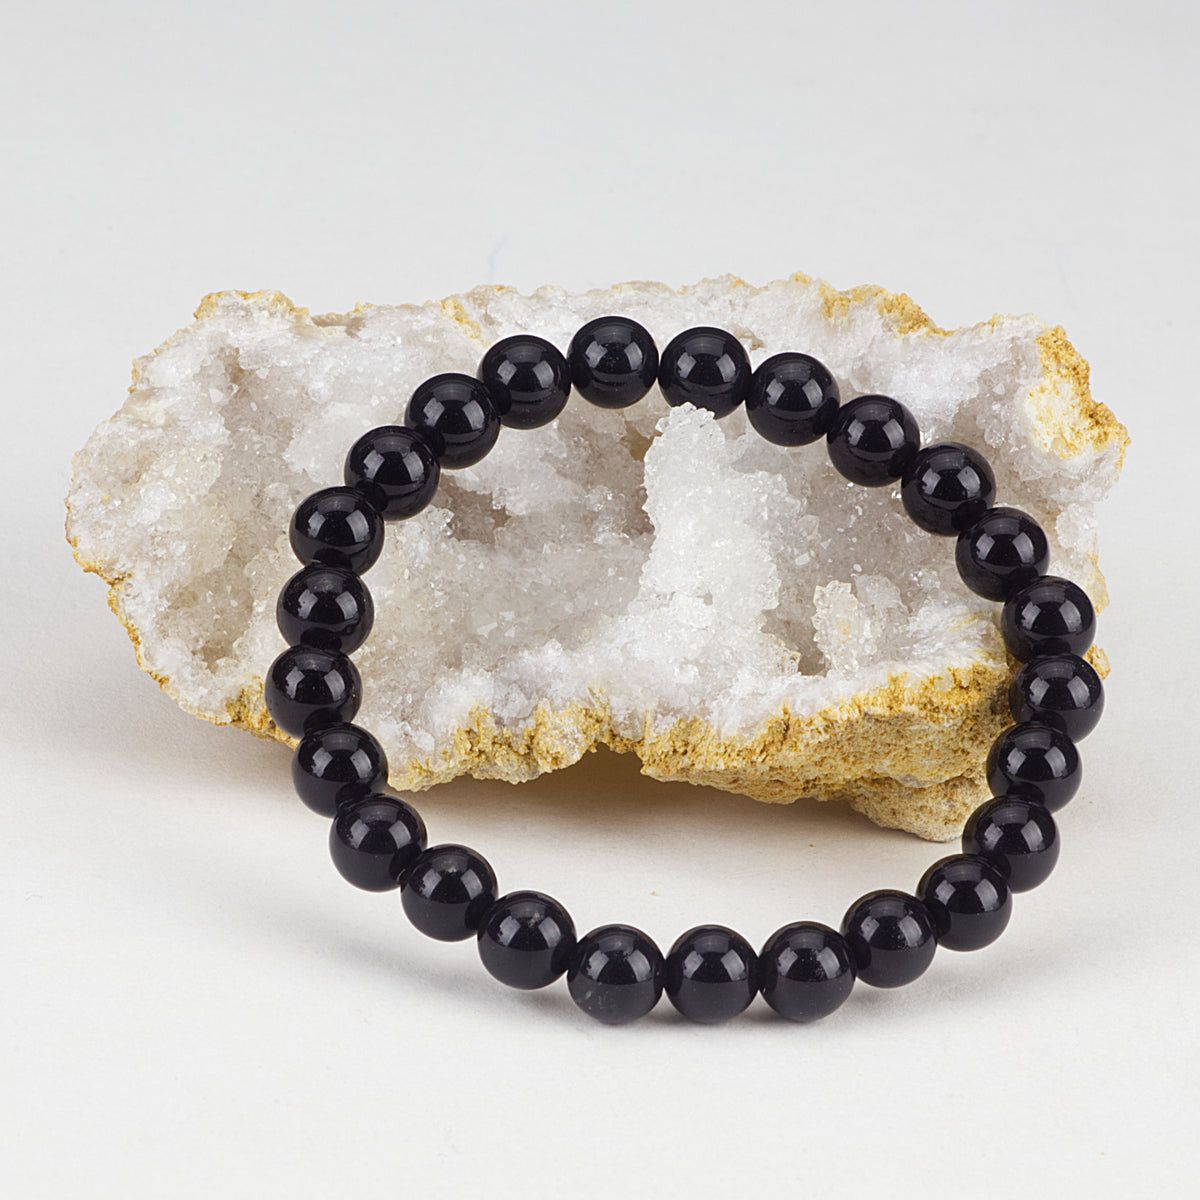 Stretch Bracelet | 8mm Beads (Black Obsidian)